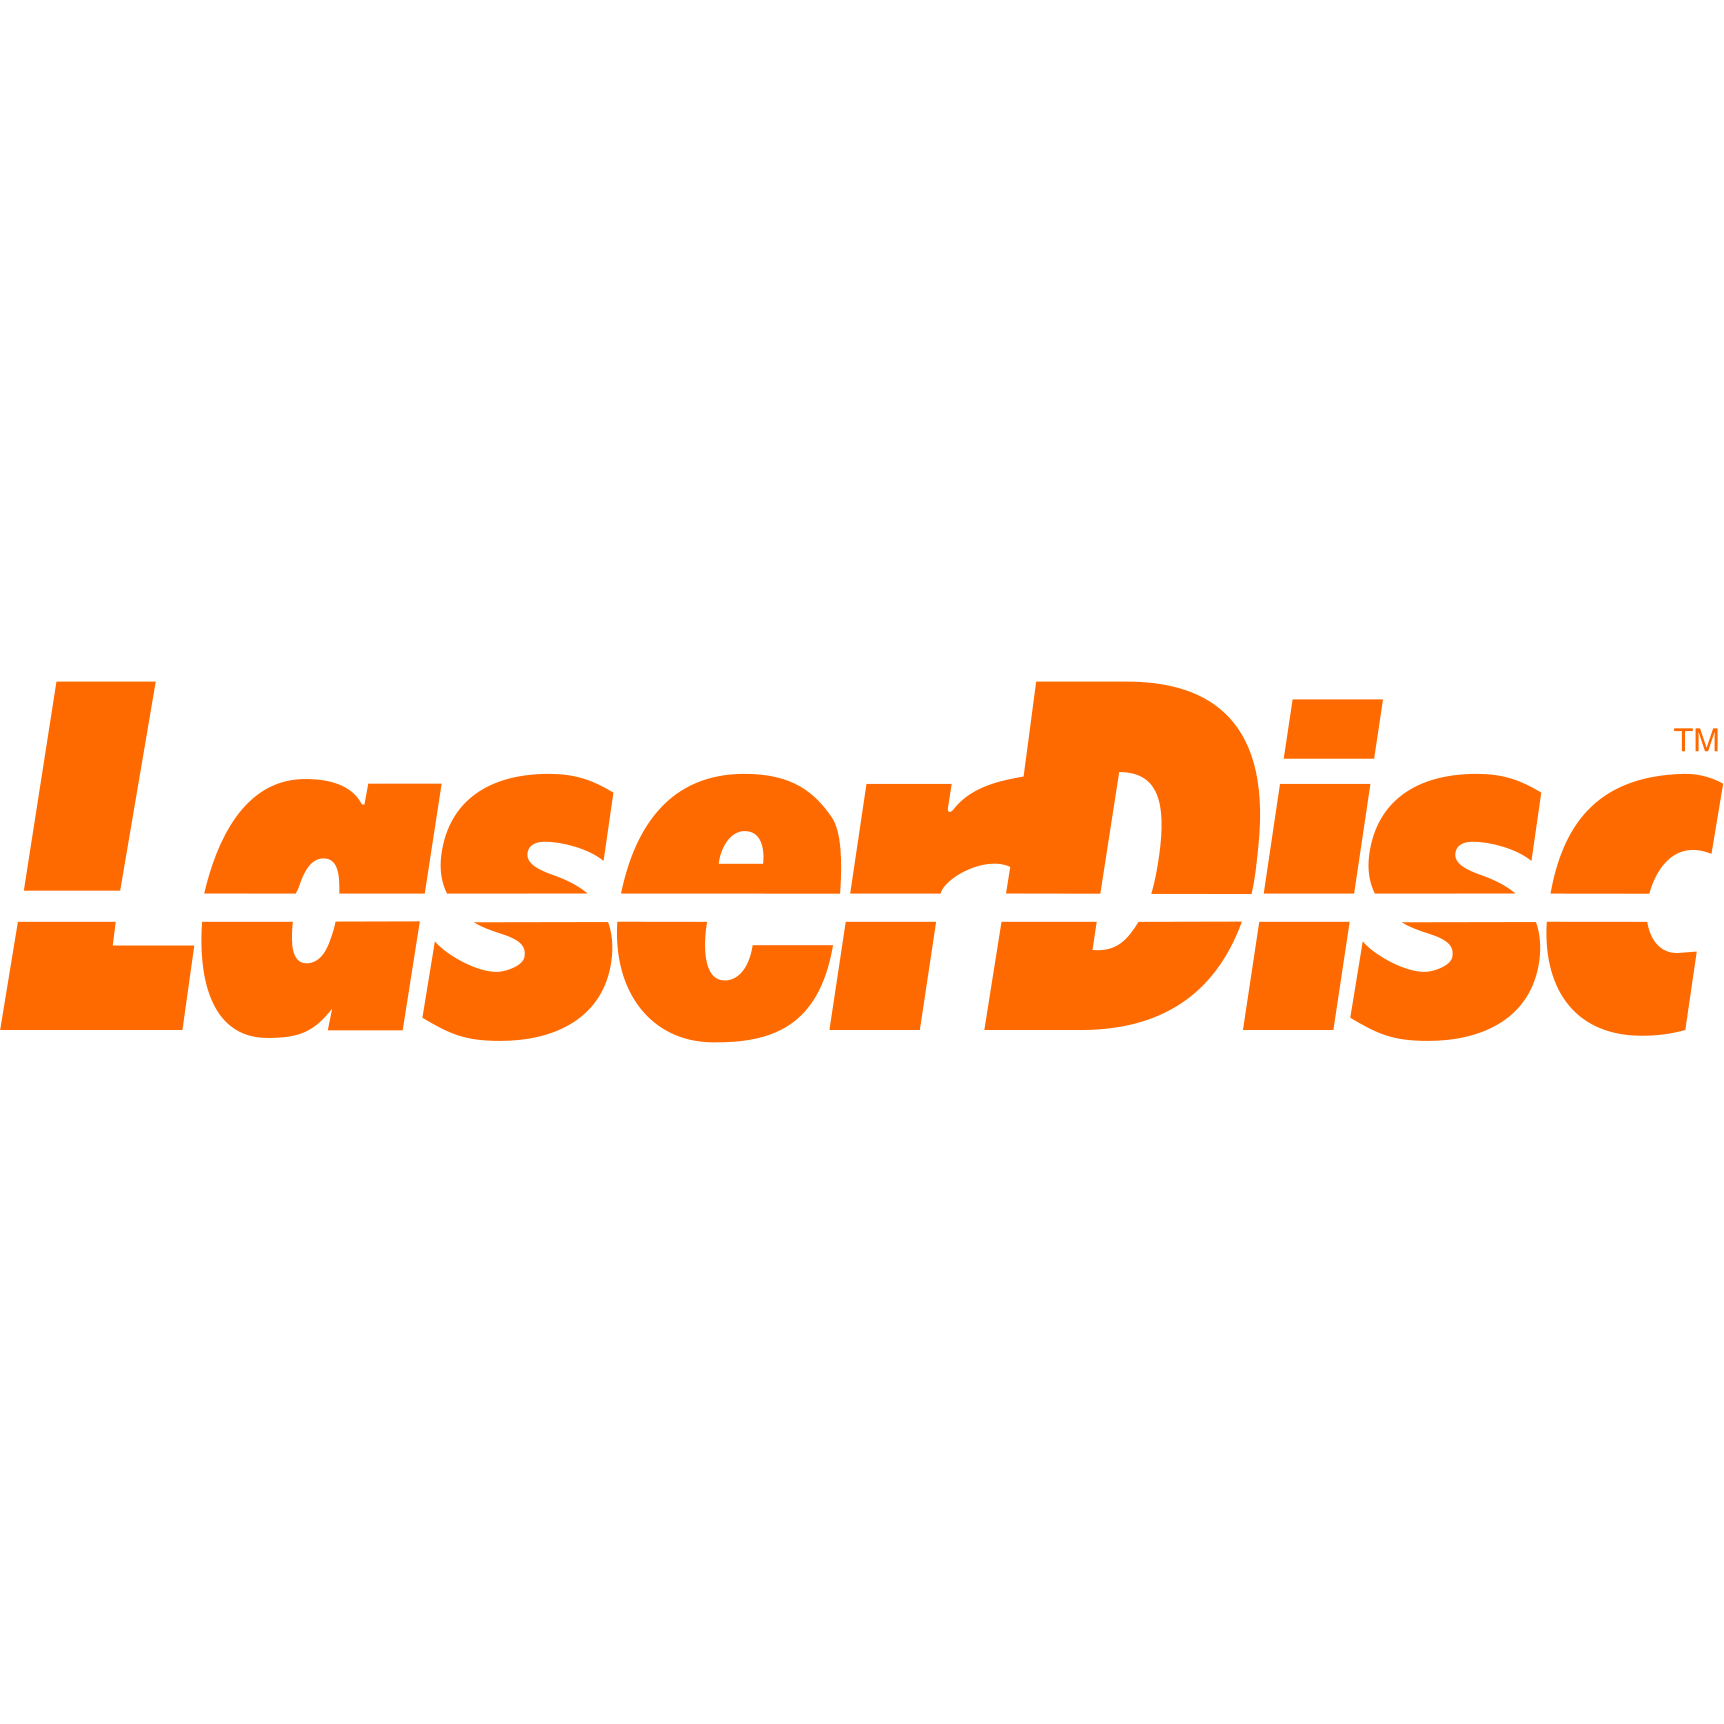 Laserdisc Logo - LaserDisc Logo | Hardware Envy in 2019 | Logos, Graphic art, Bike design